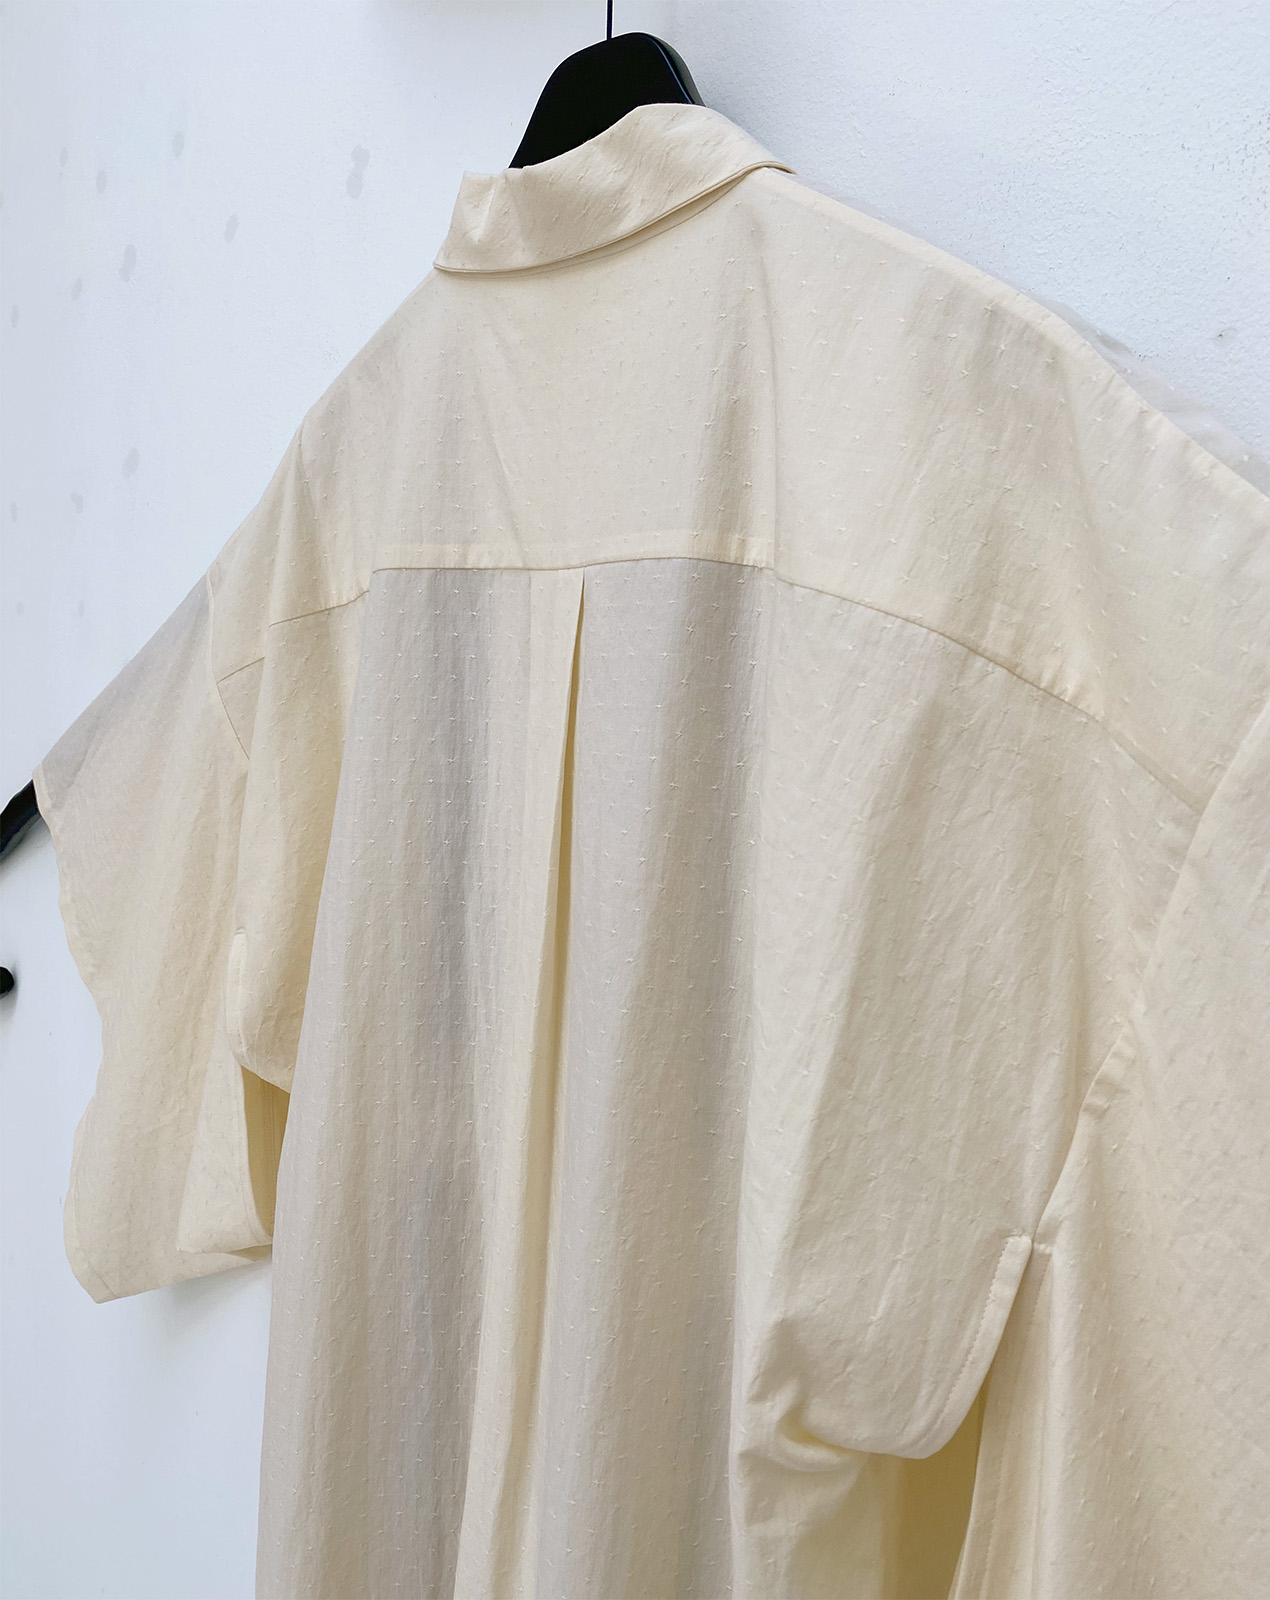 ANTS. oversized kimono shirt in light yellow cotton fabric